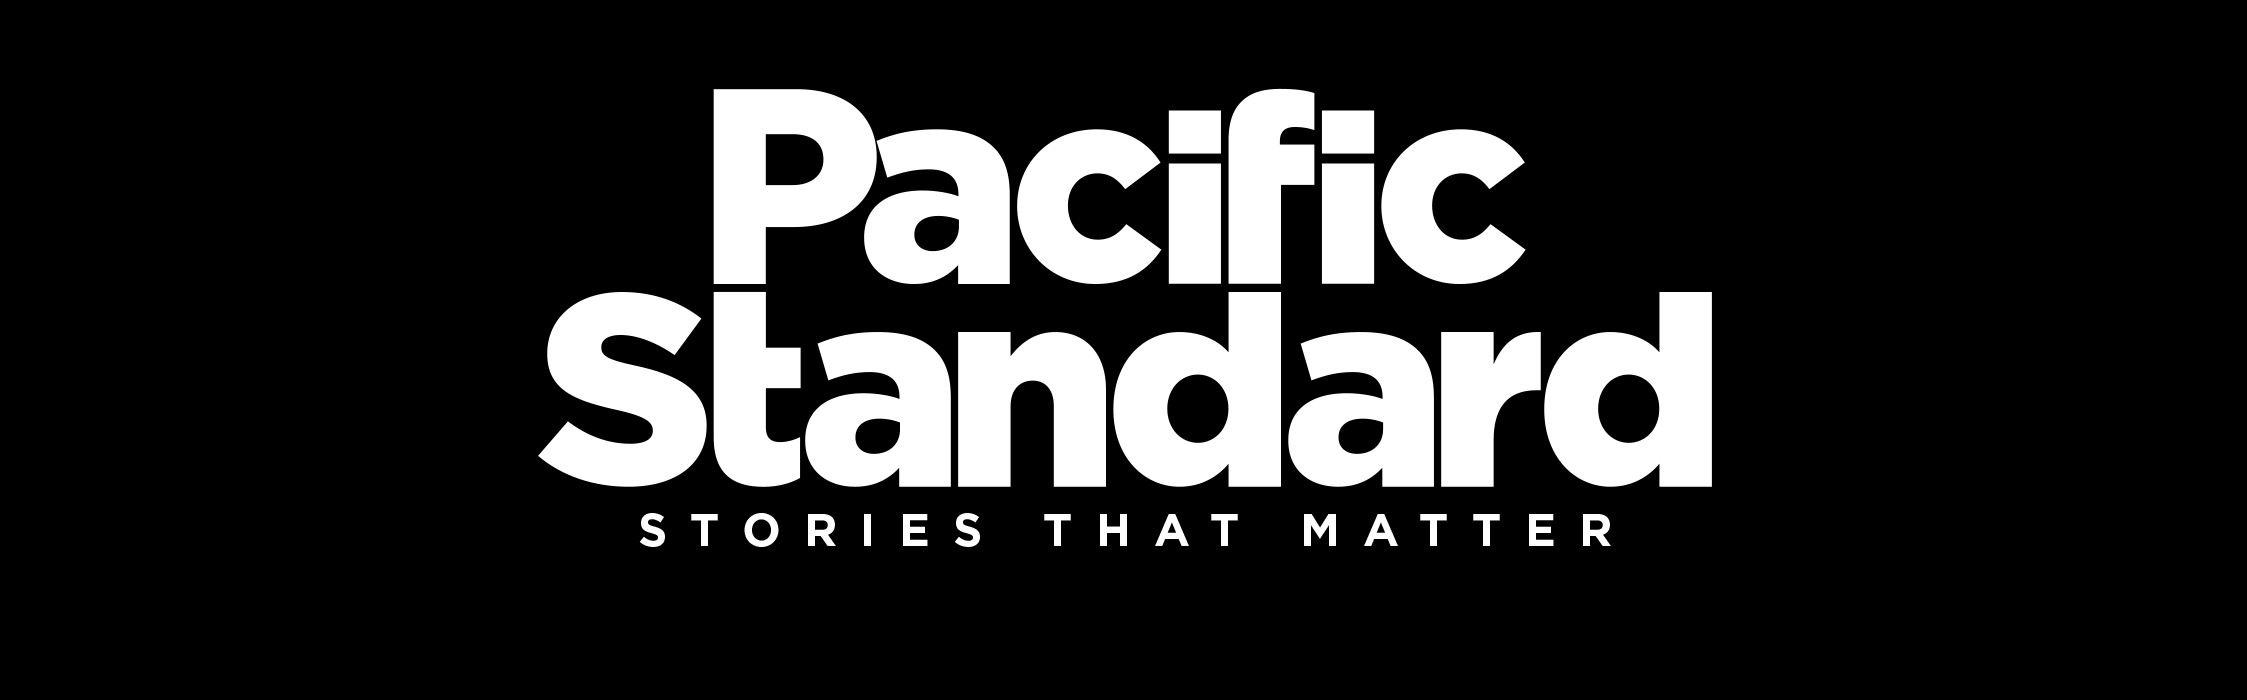 Pacific standard gta 5 как начать фото 115